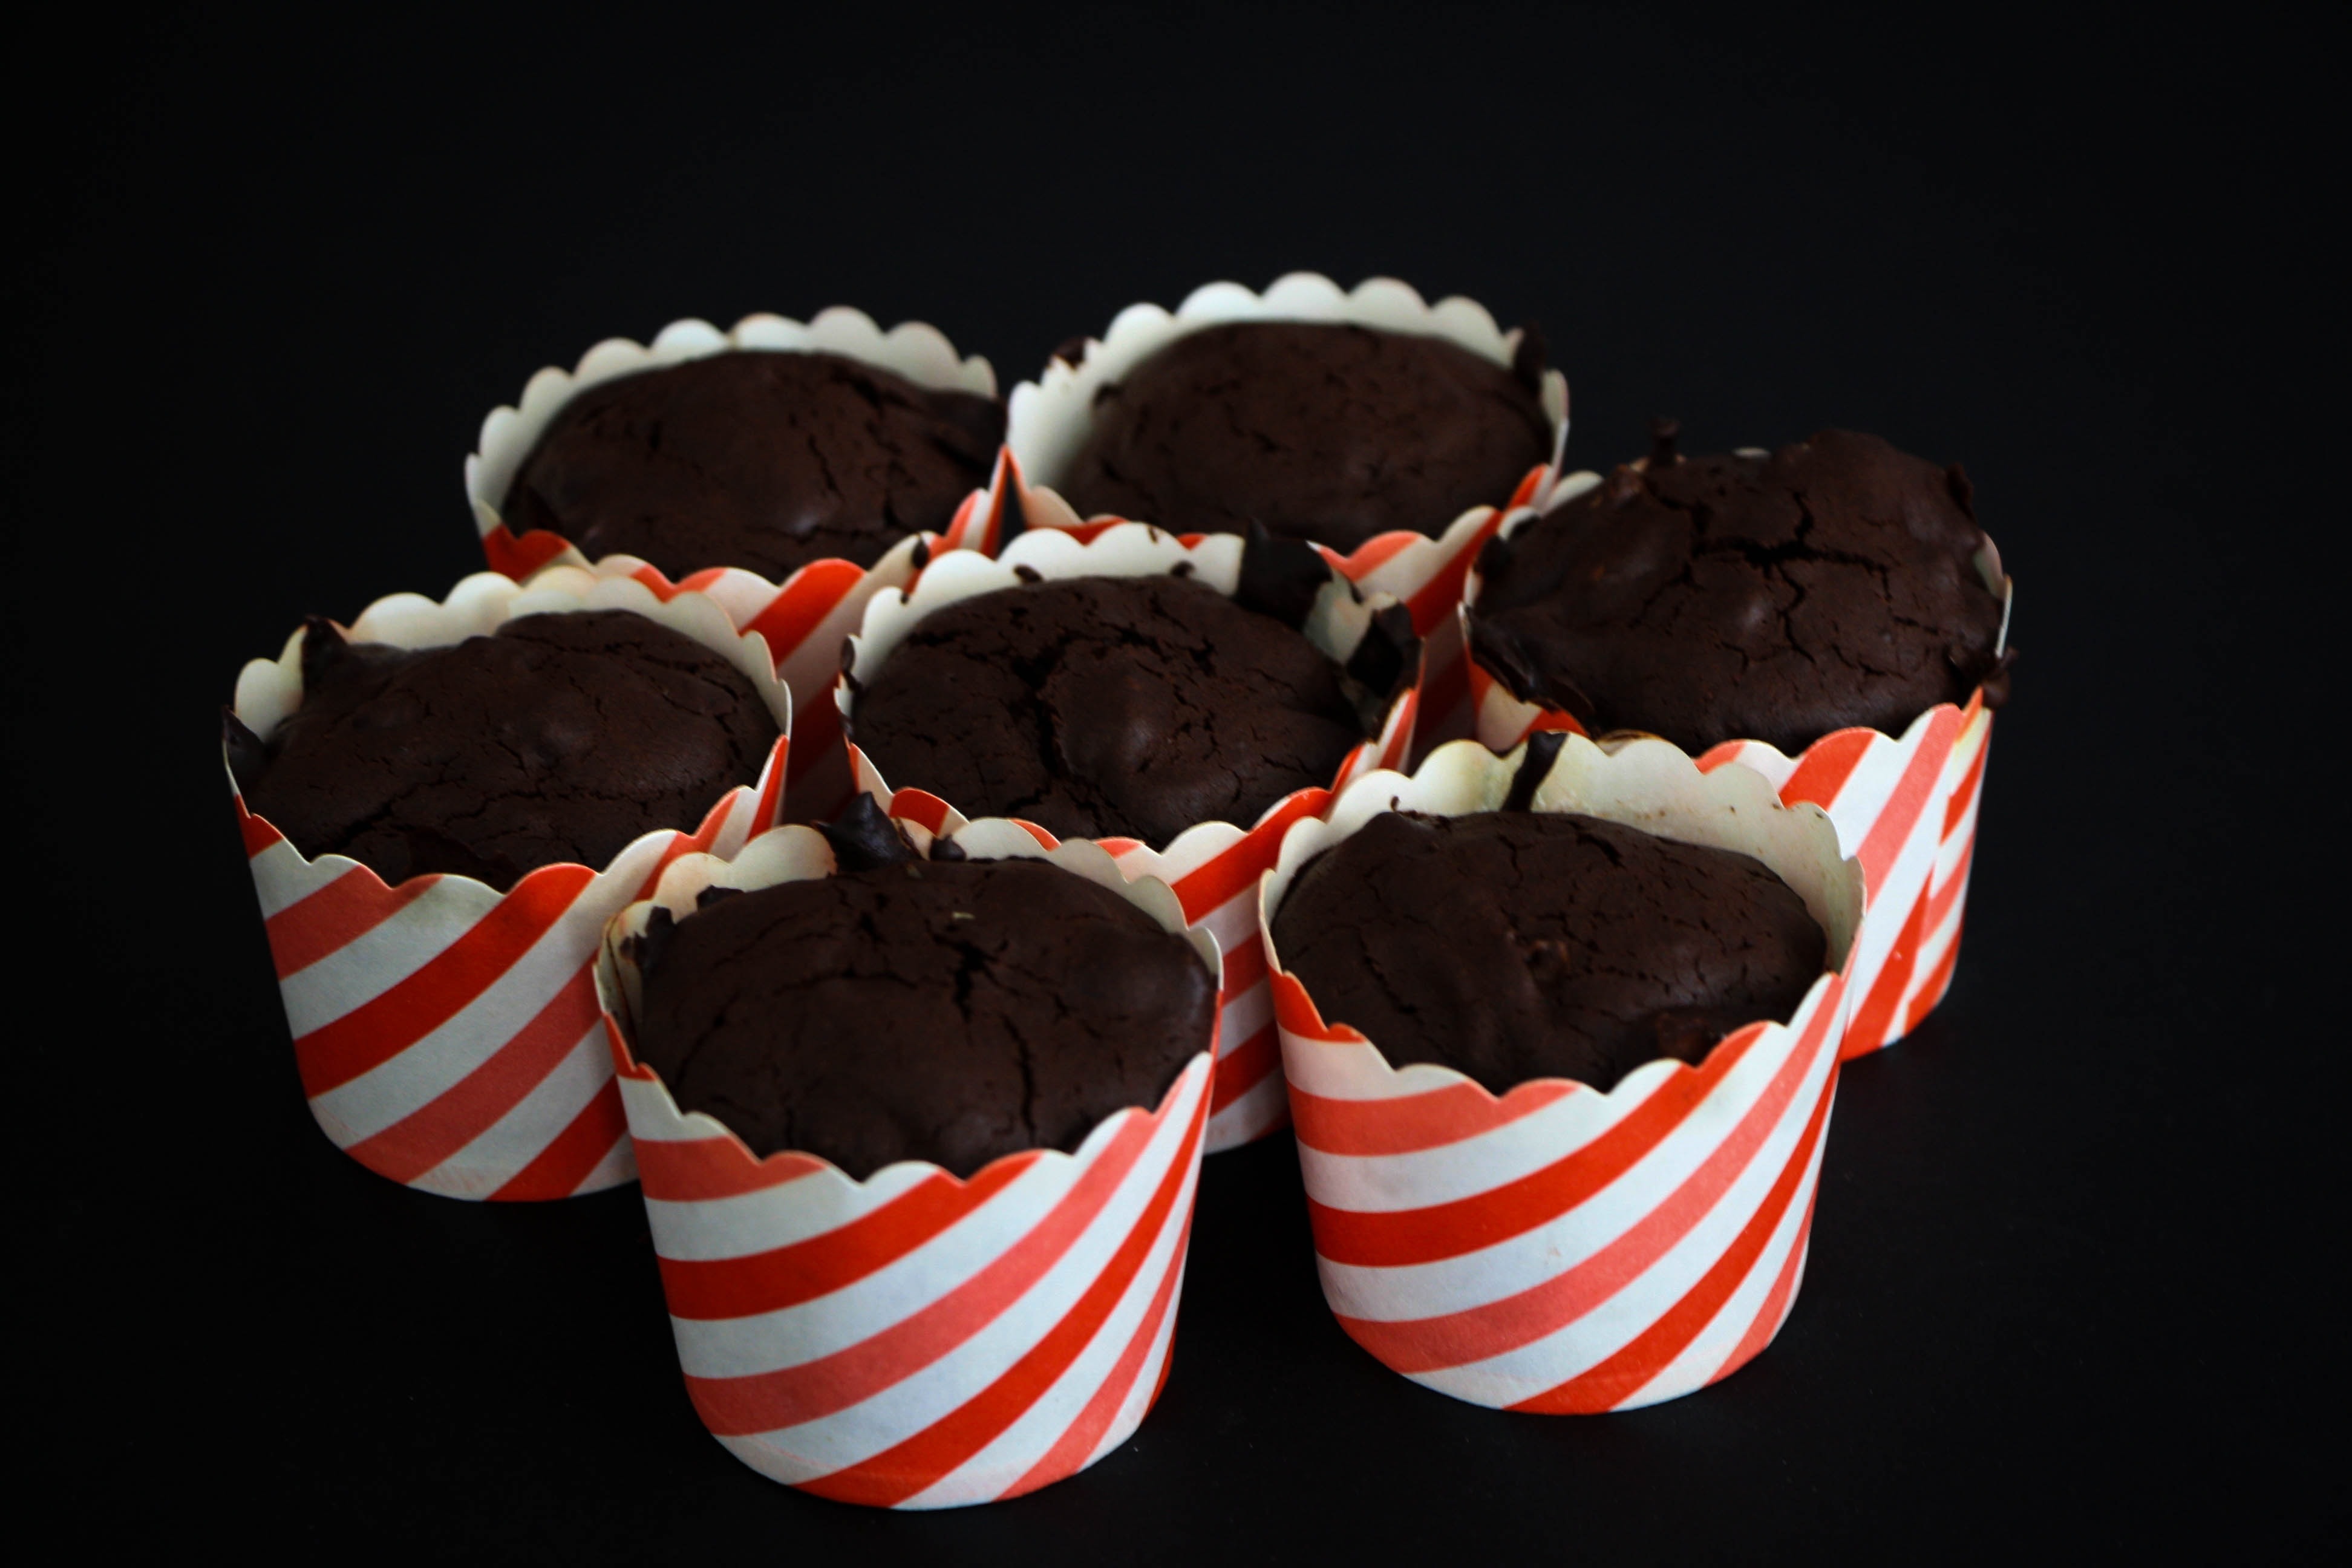 7 chocolate muffins